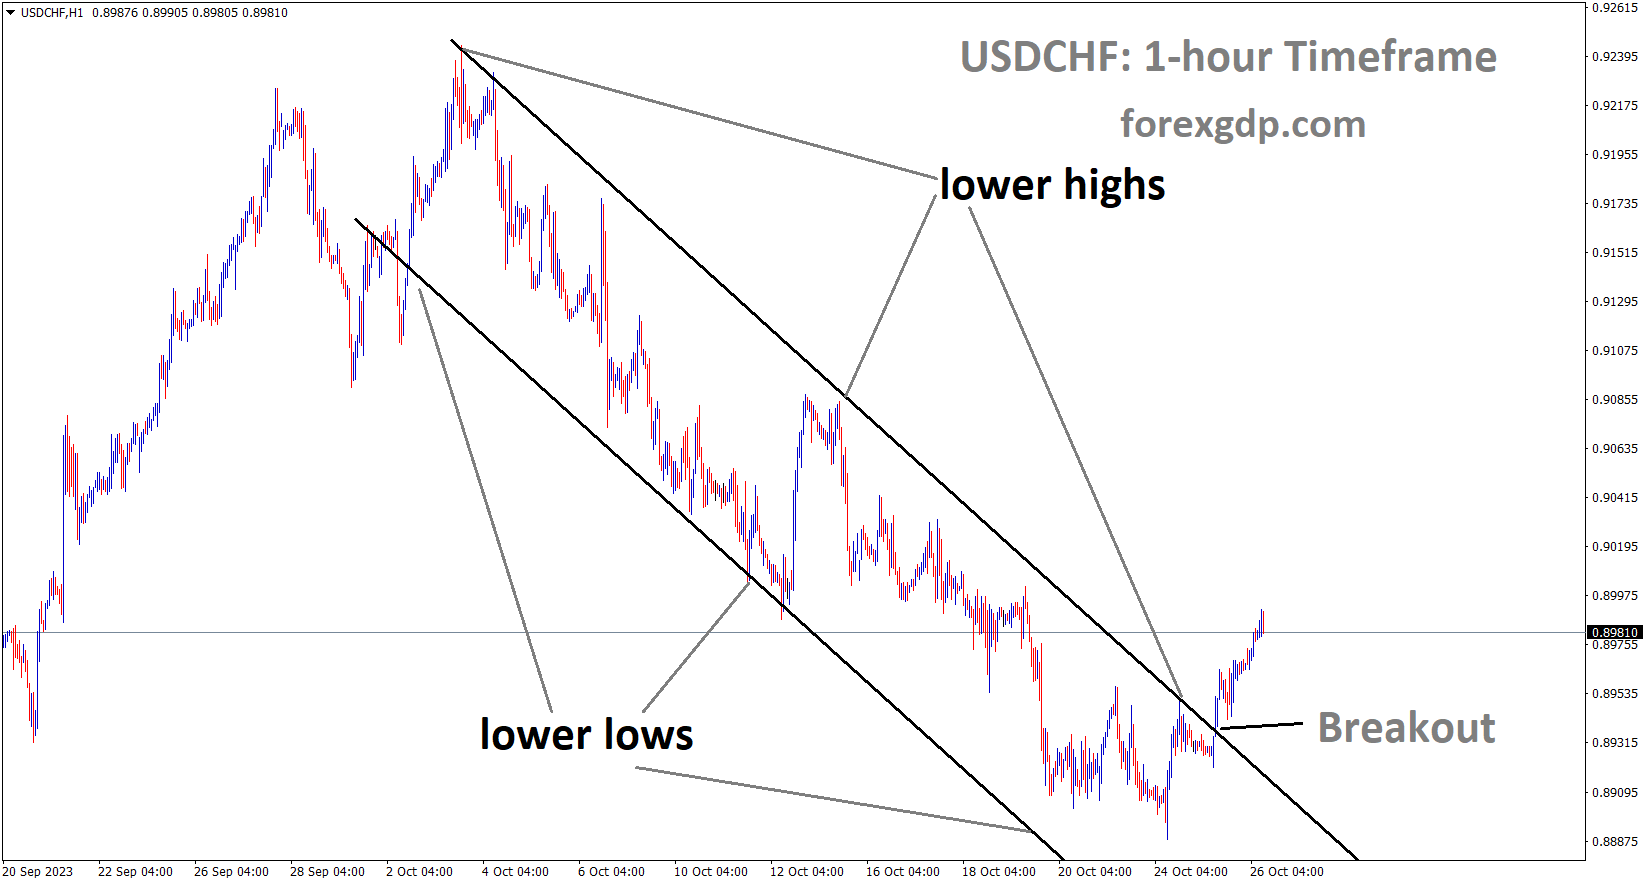 USDCHF has broken the Descending channel in upside